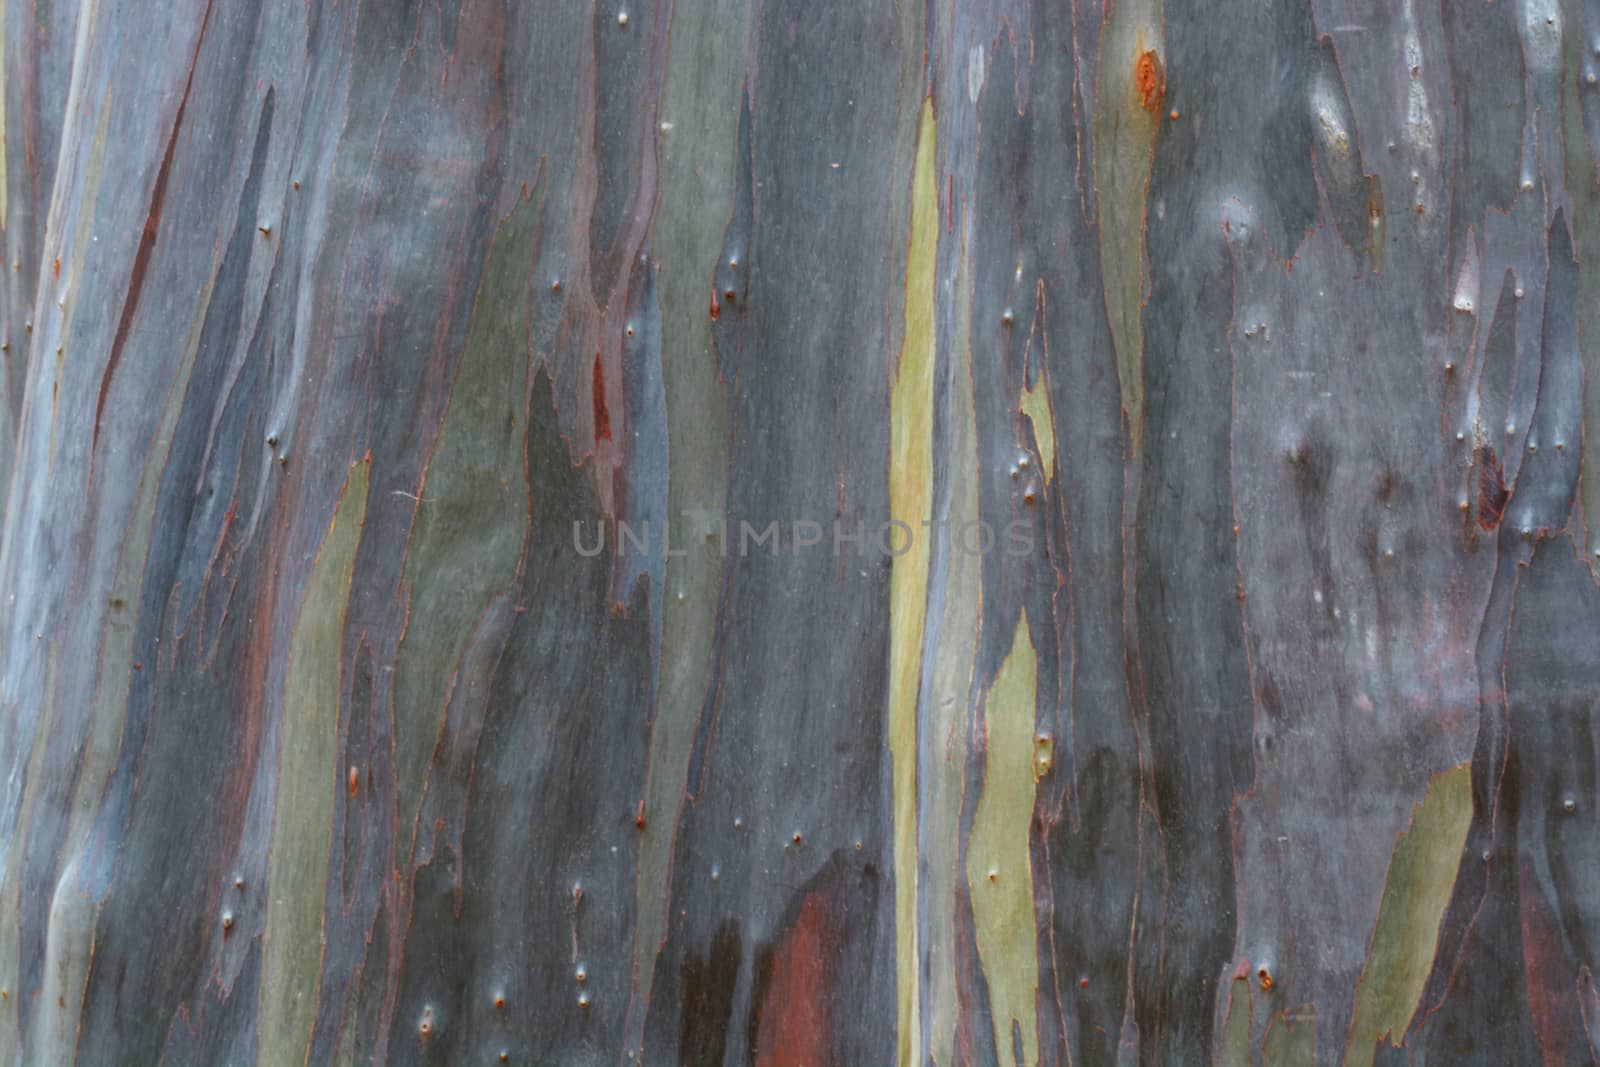 Rainbow Eucalyptus Tree by ideation90